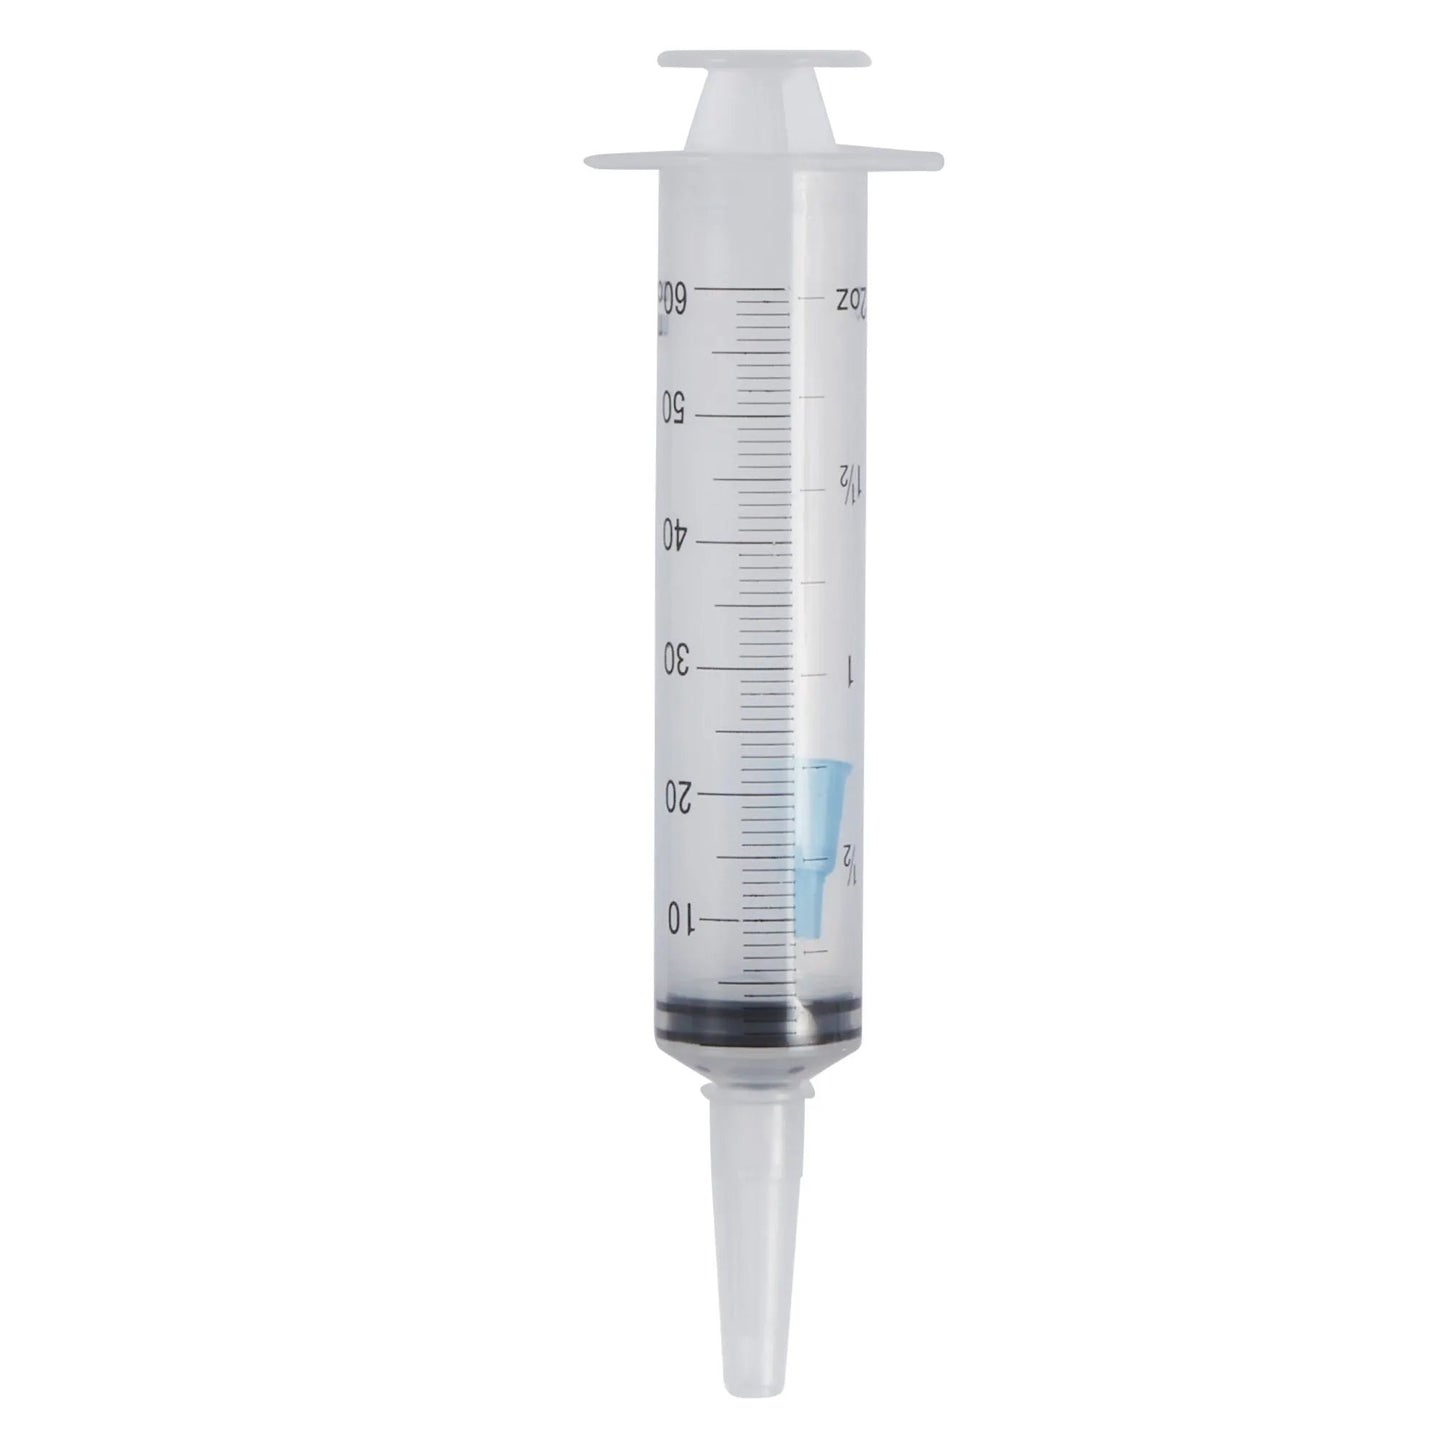 AMSure Enteral Feeding / Irrigation Syringe, 60 mL